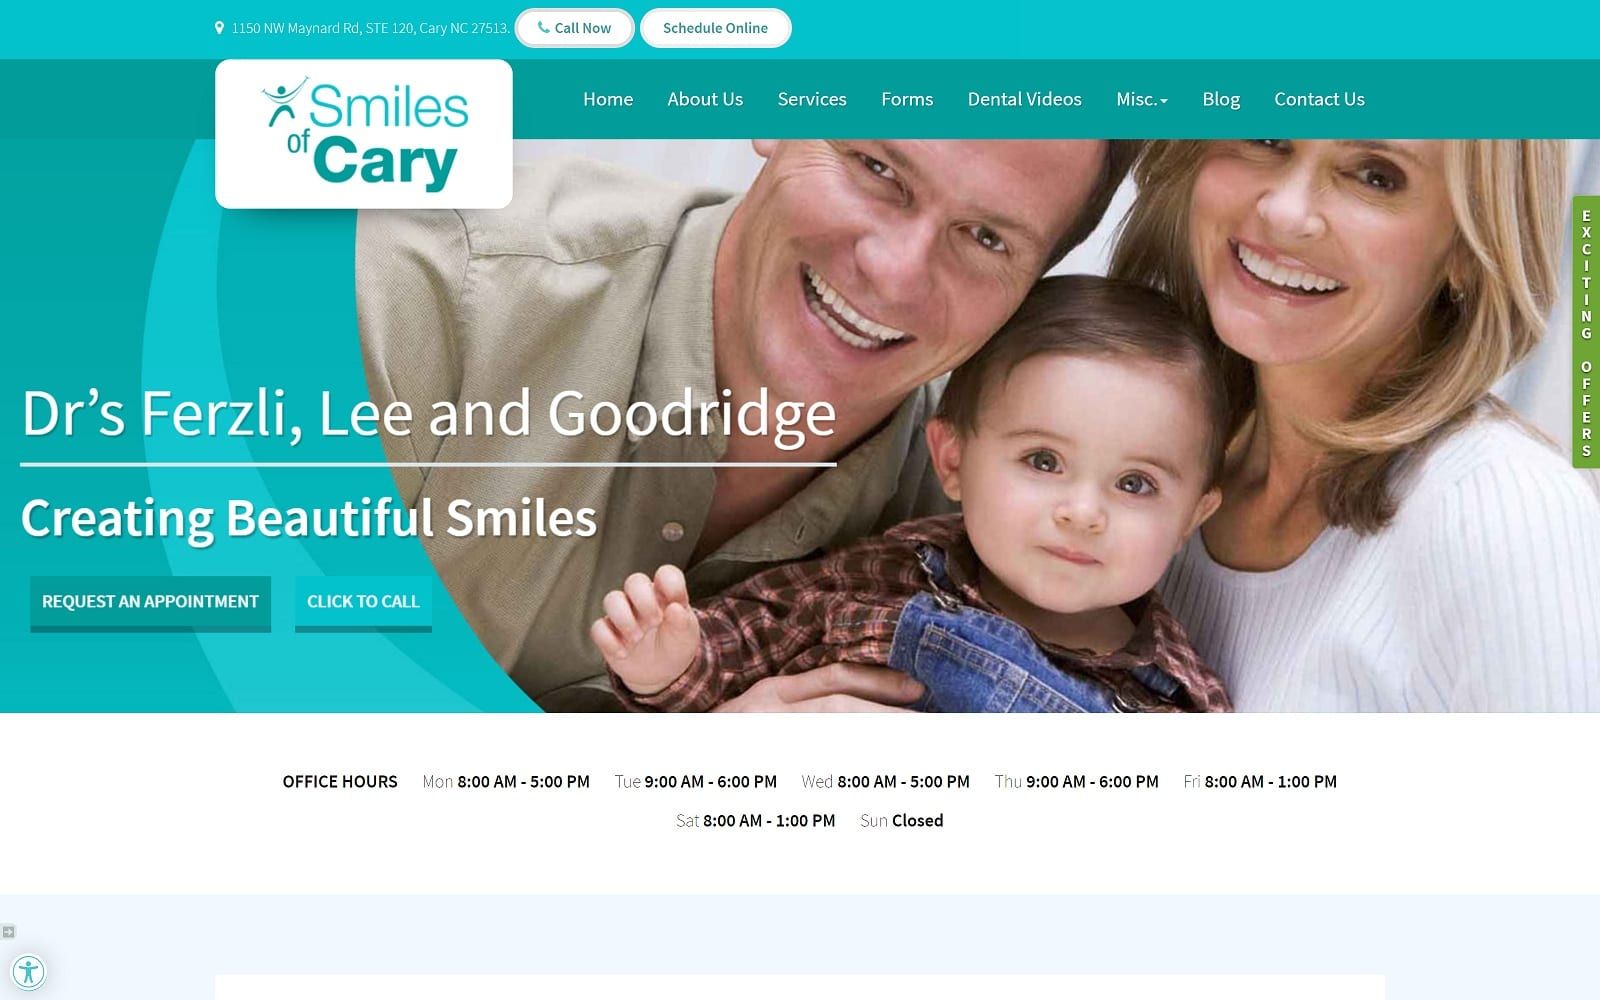 The screenshot of smiles of cary family dentistry smilesofcary. Com website